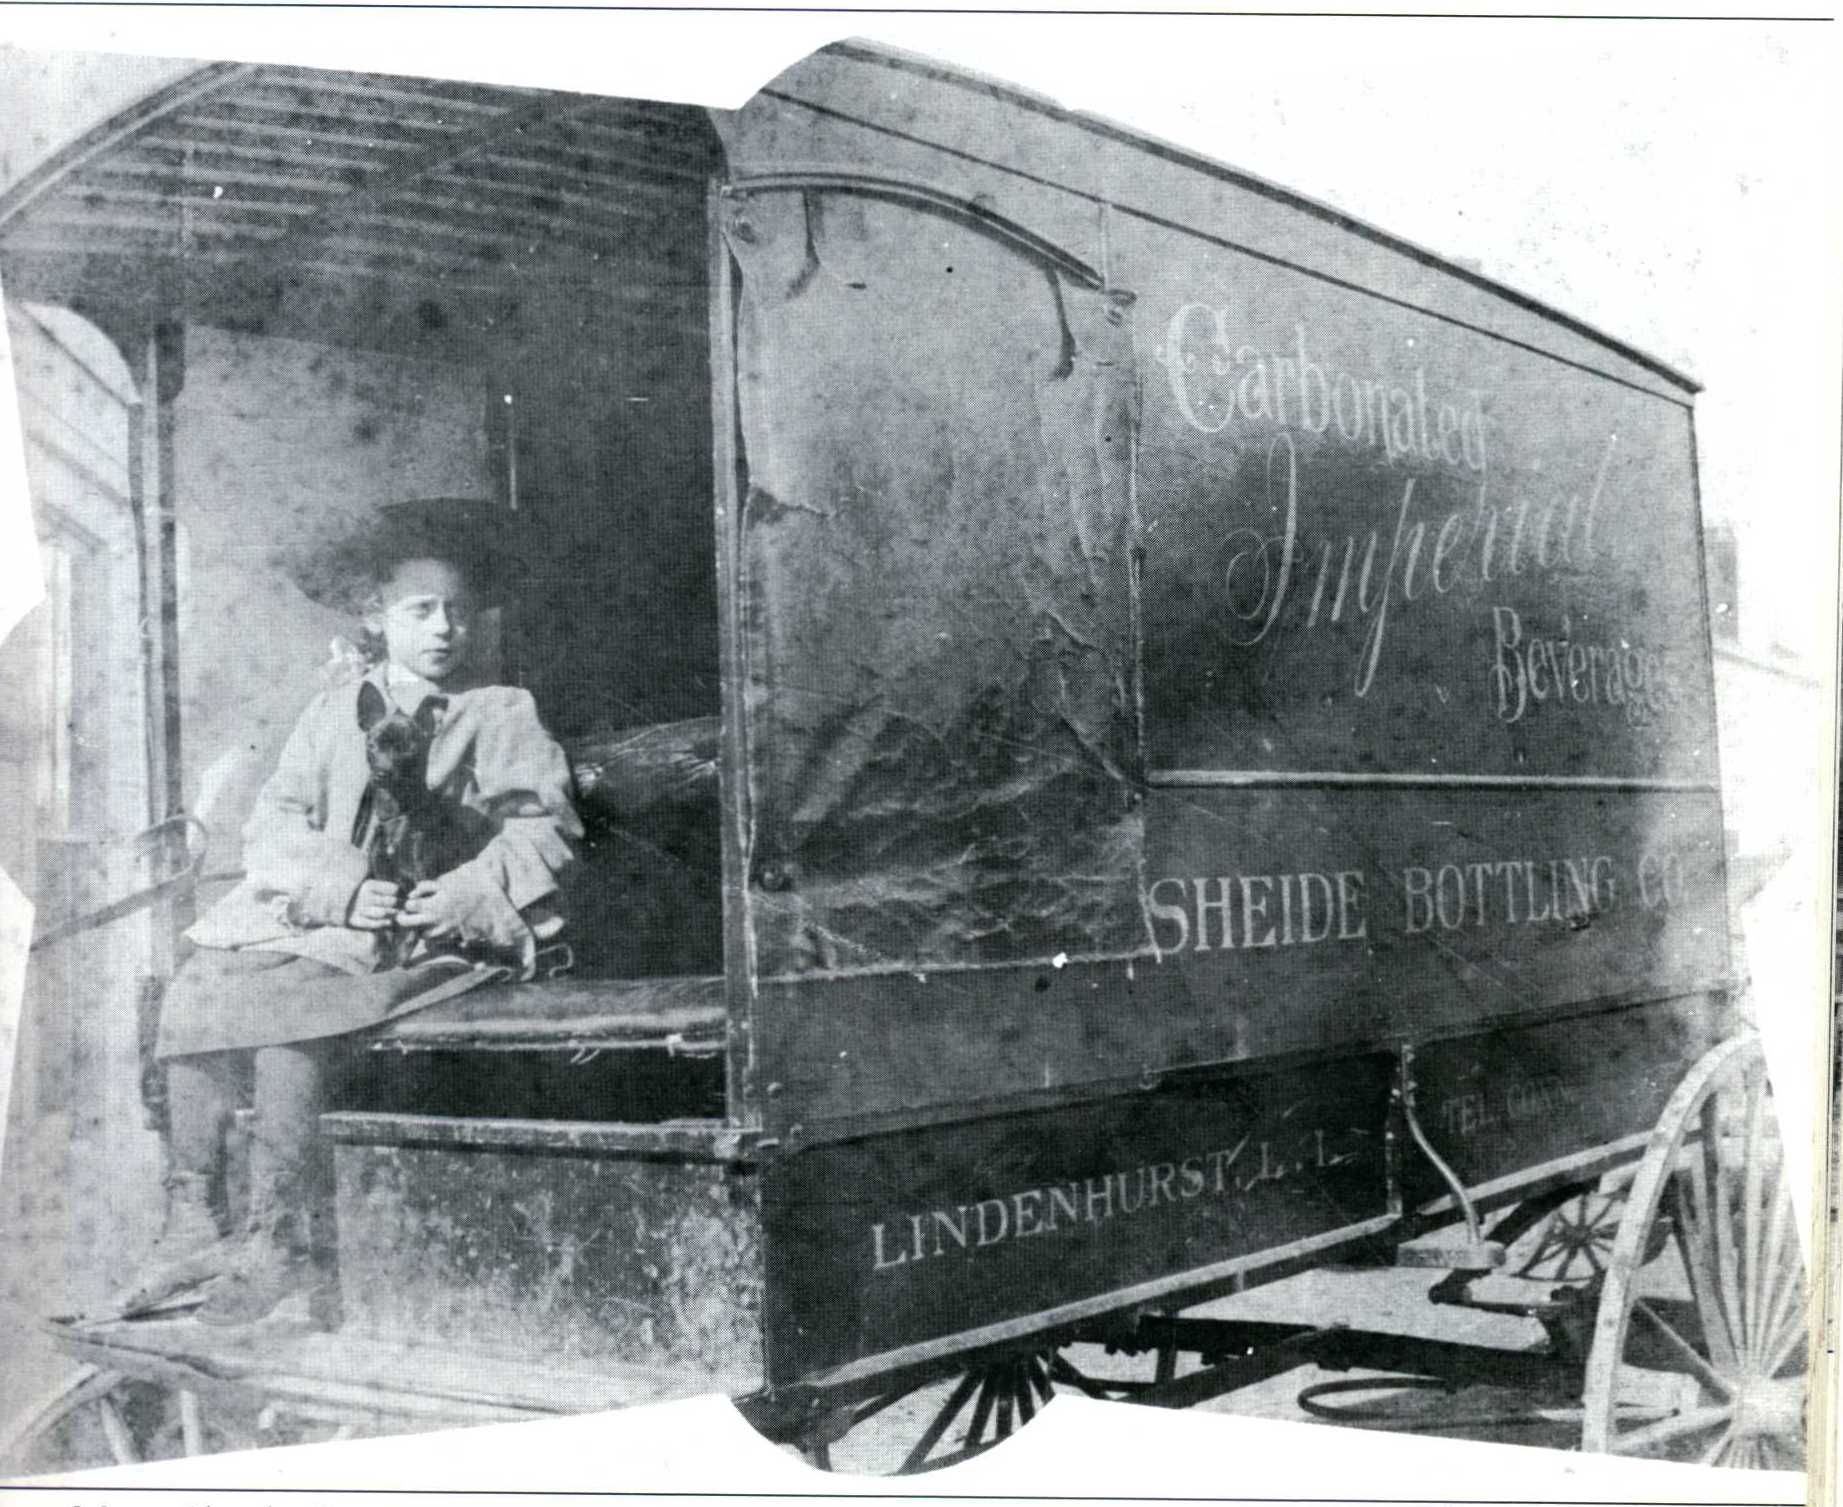 Scheide Bottling Co. delivery wagon